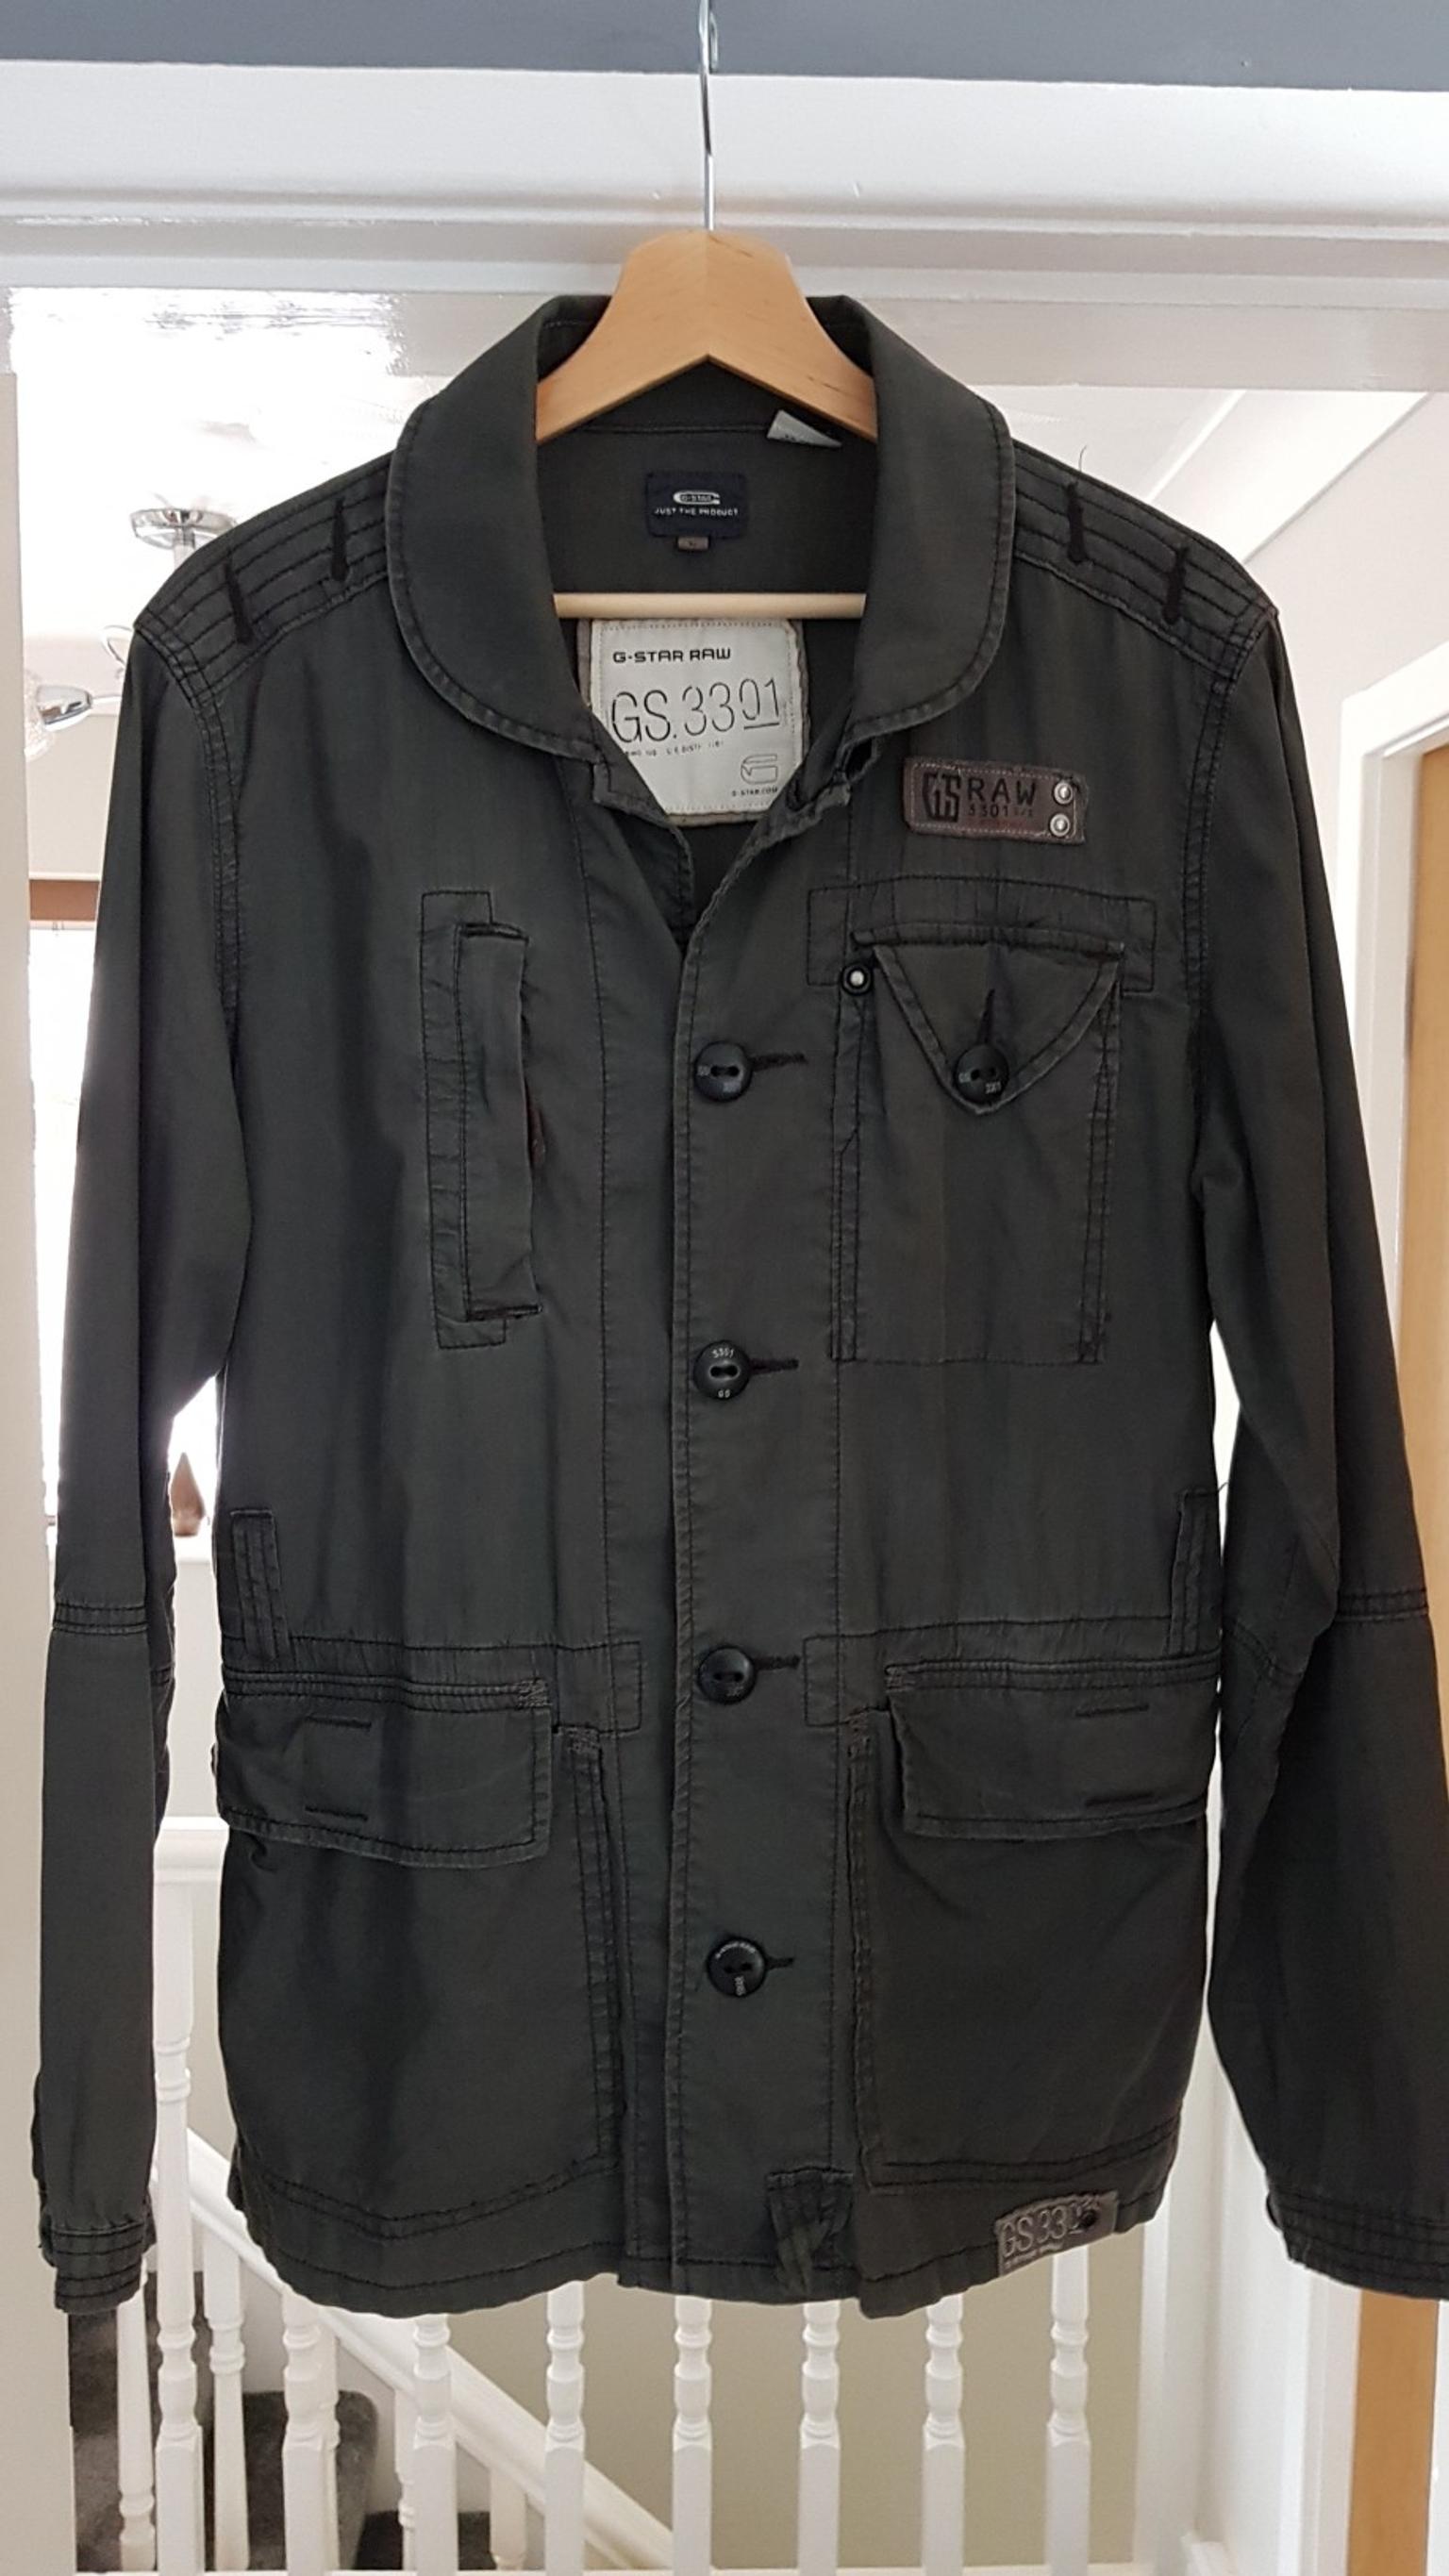 gs 3301 jacket